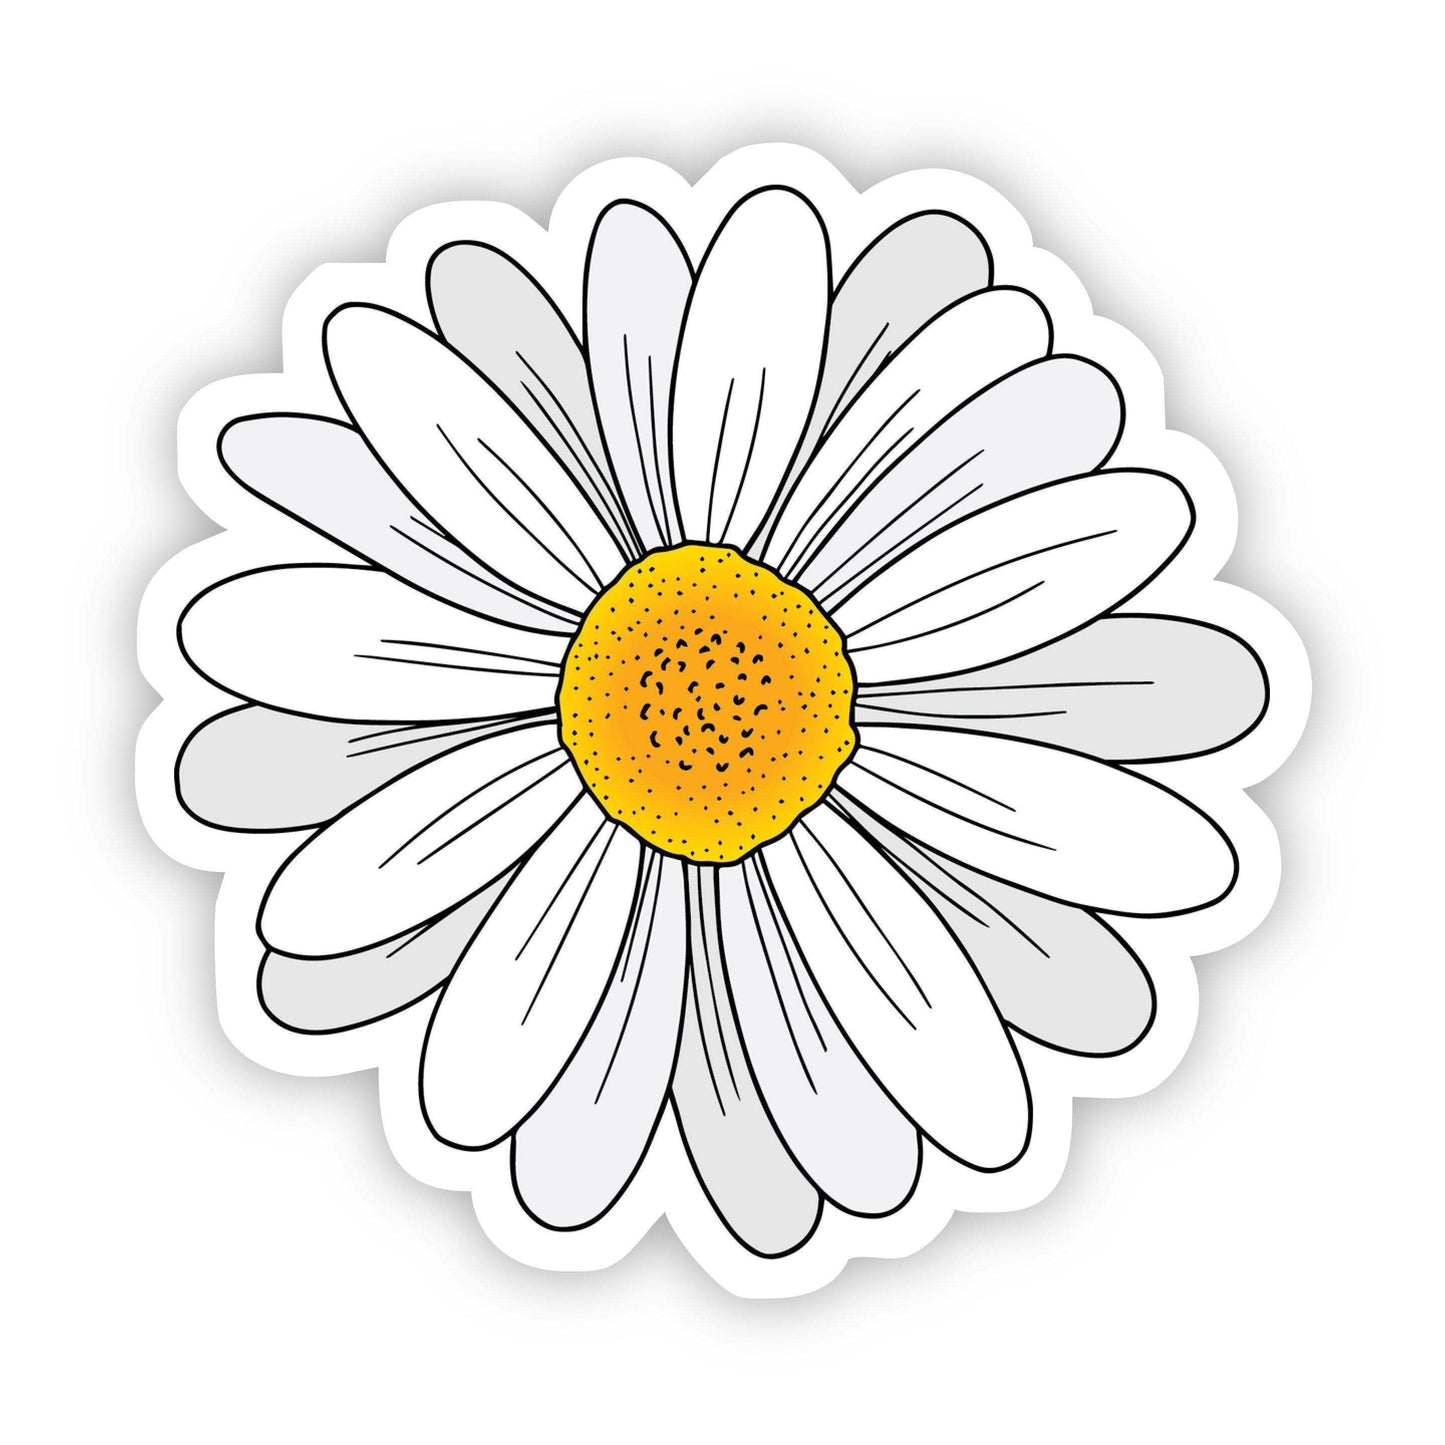 Sticker-Flower-01: Daisy